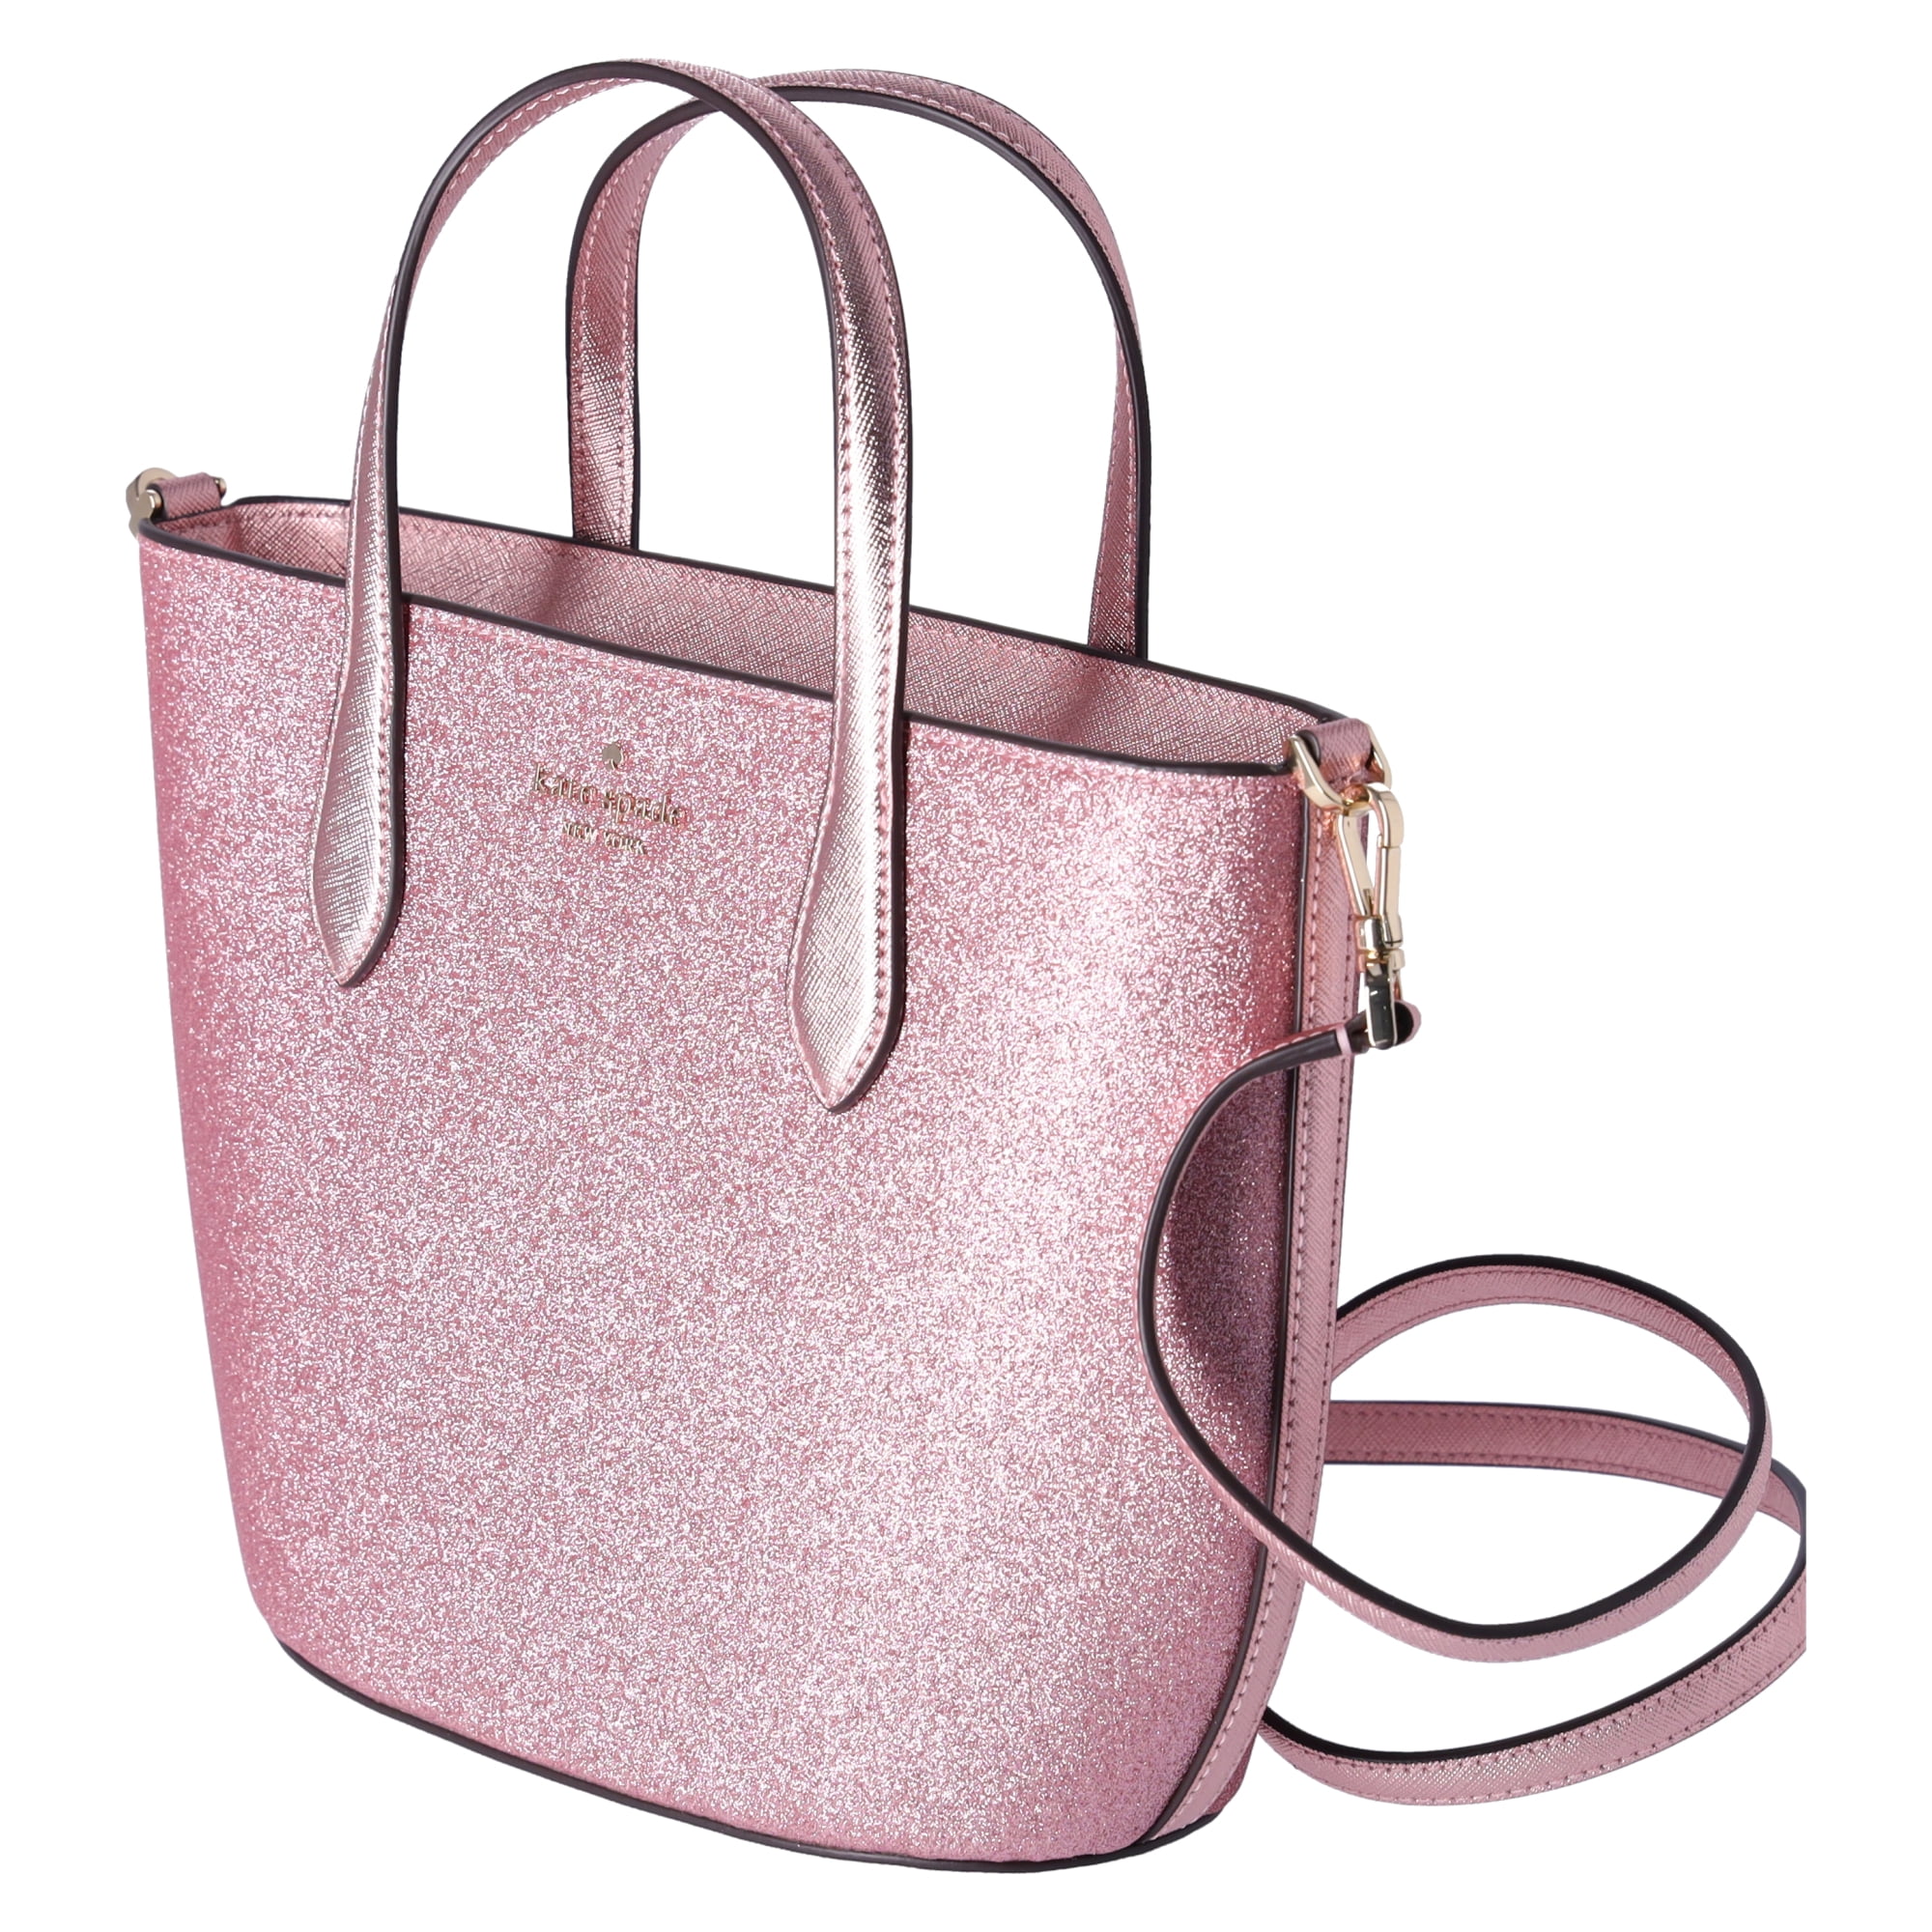 kate spade | Bags | Kate Spade Limited Edition Glitter Purse Rose Gold |  Poshmark